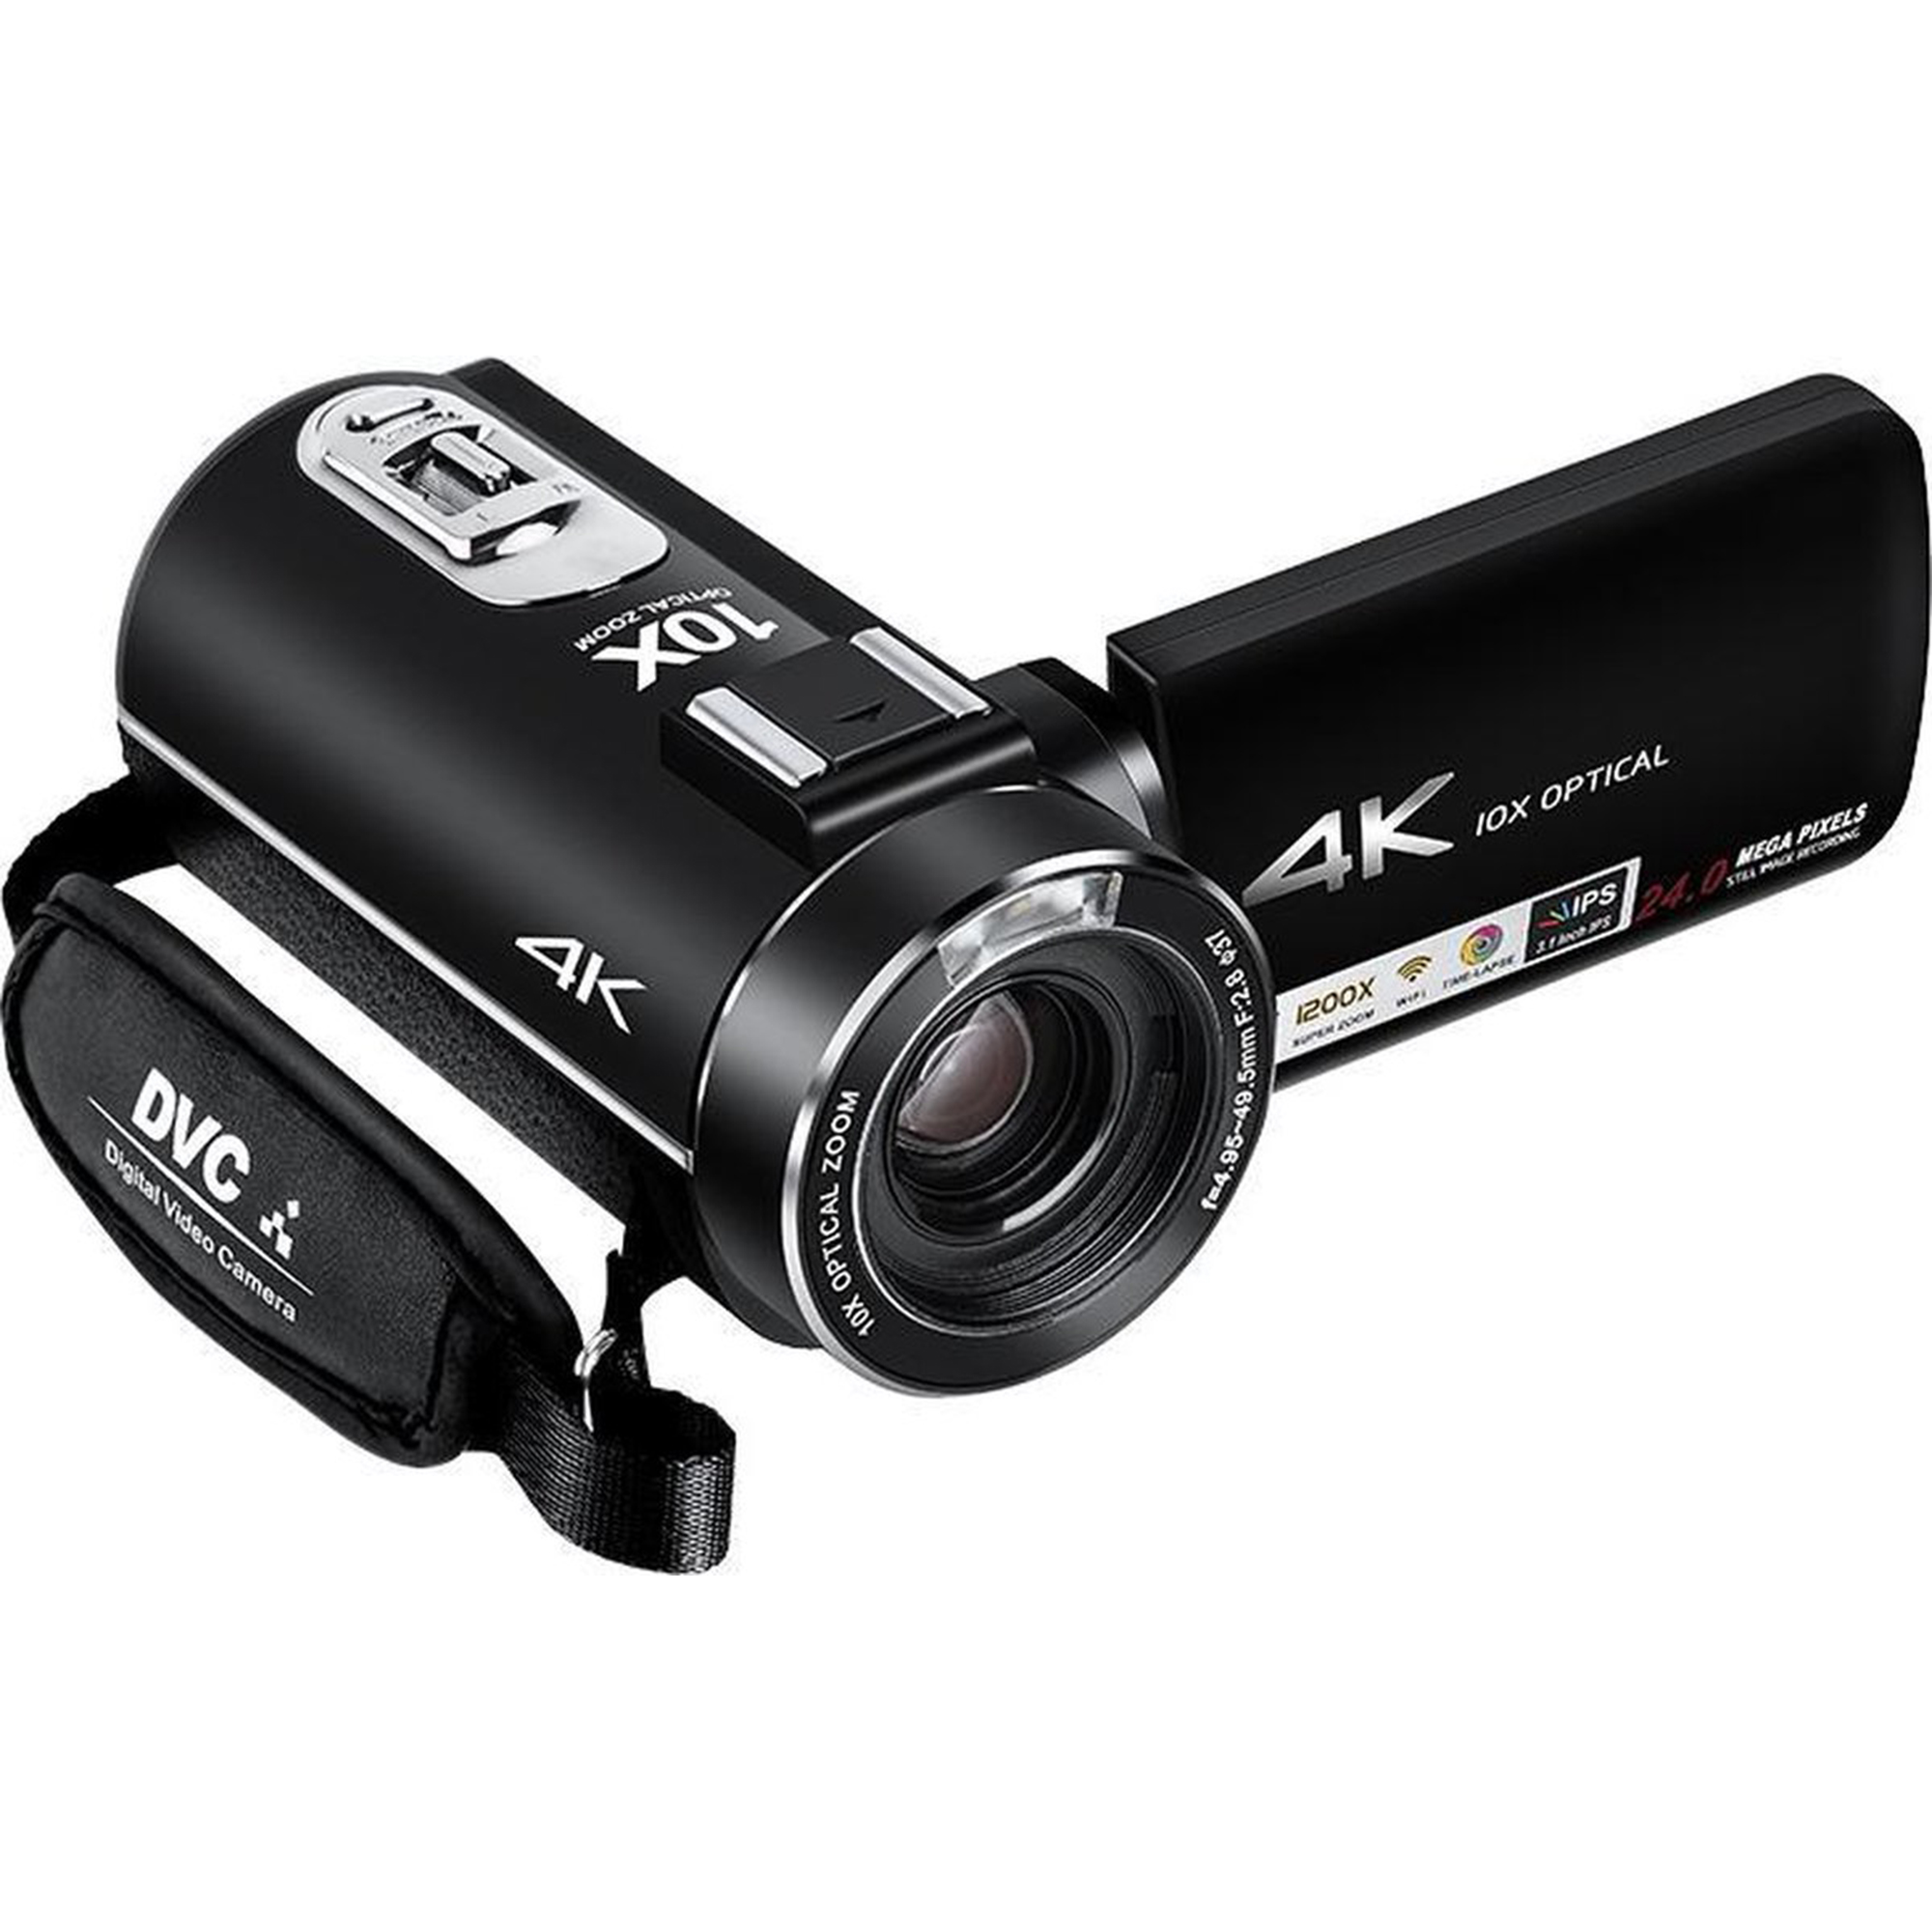 LIPA AD-C7 camcorder 4K 24 Zoom Megapixel, Camcorder 10xopt